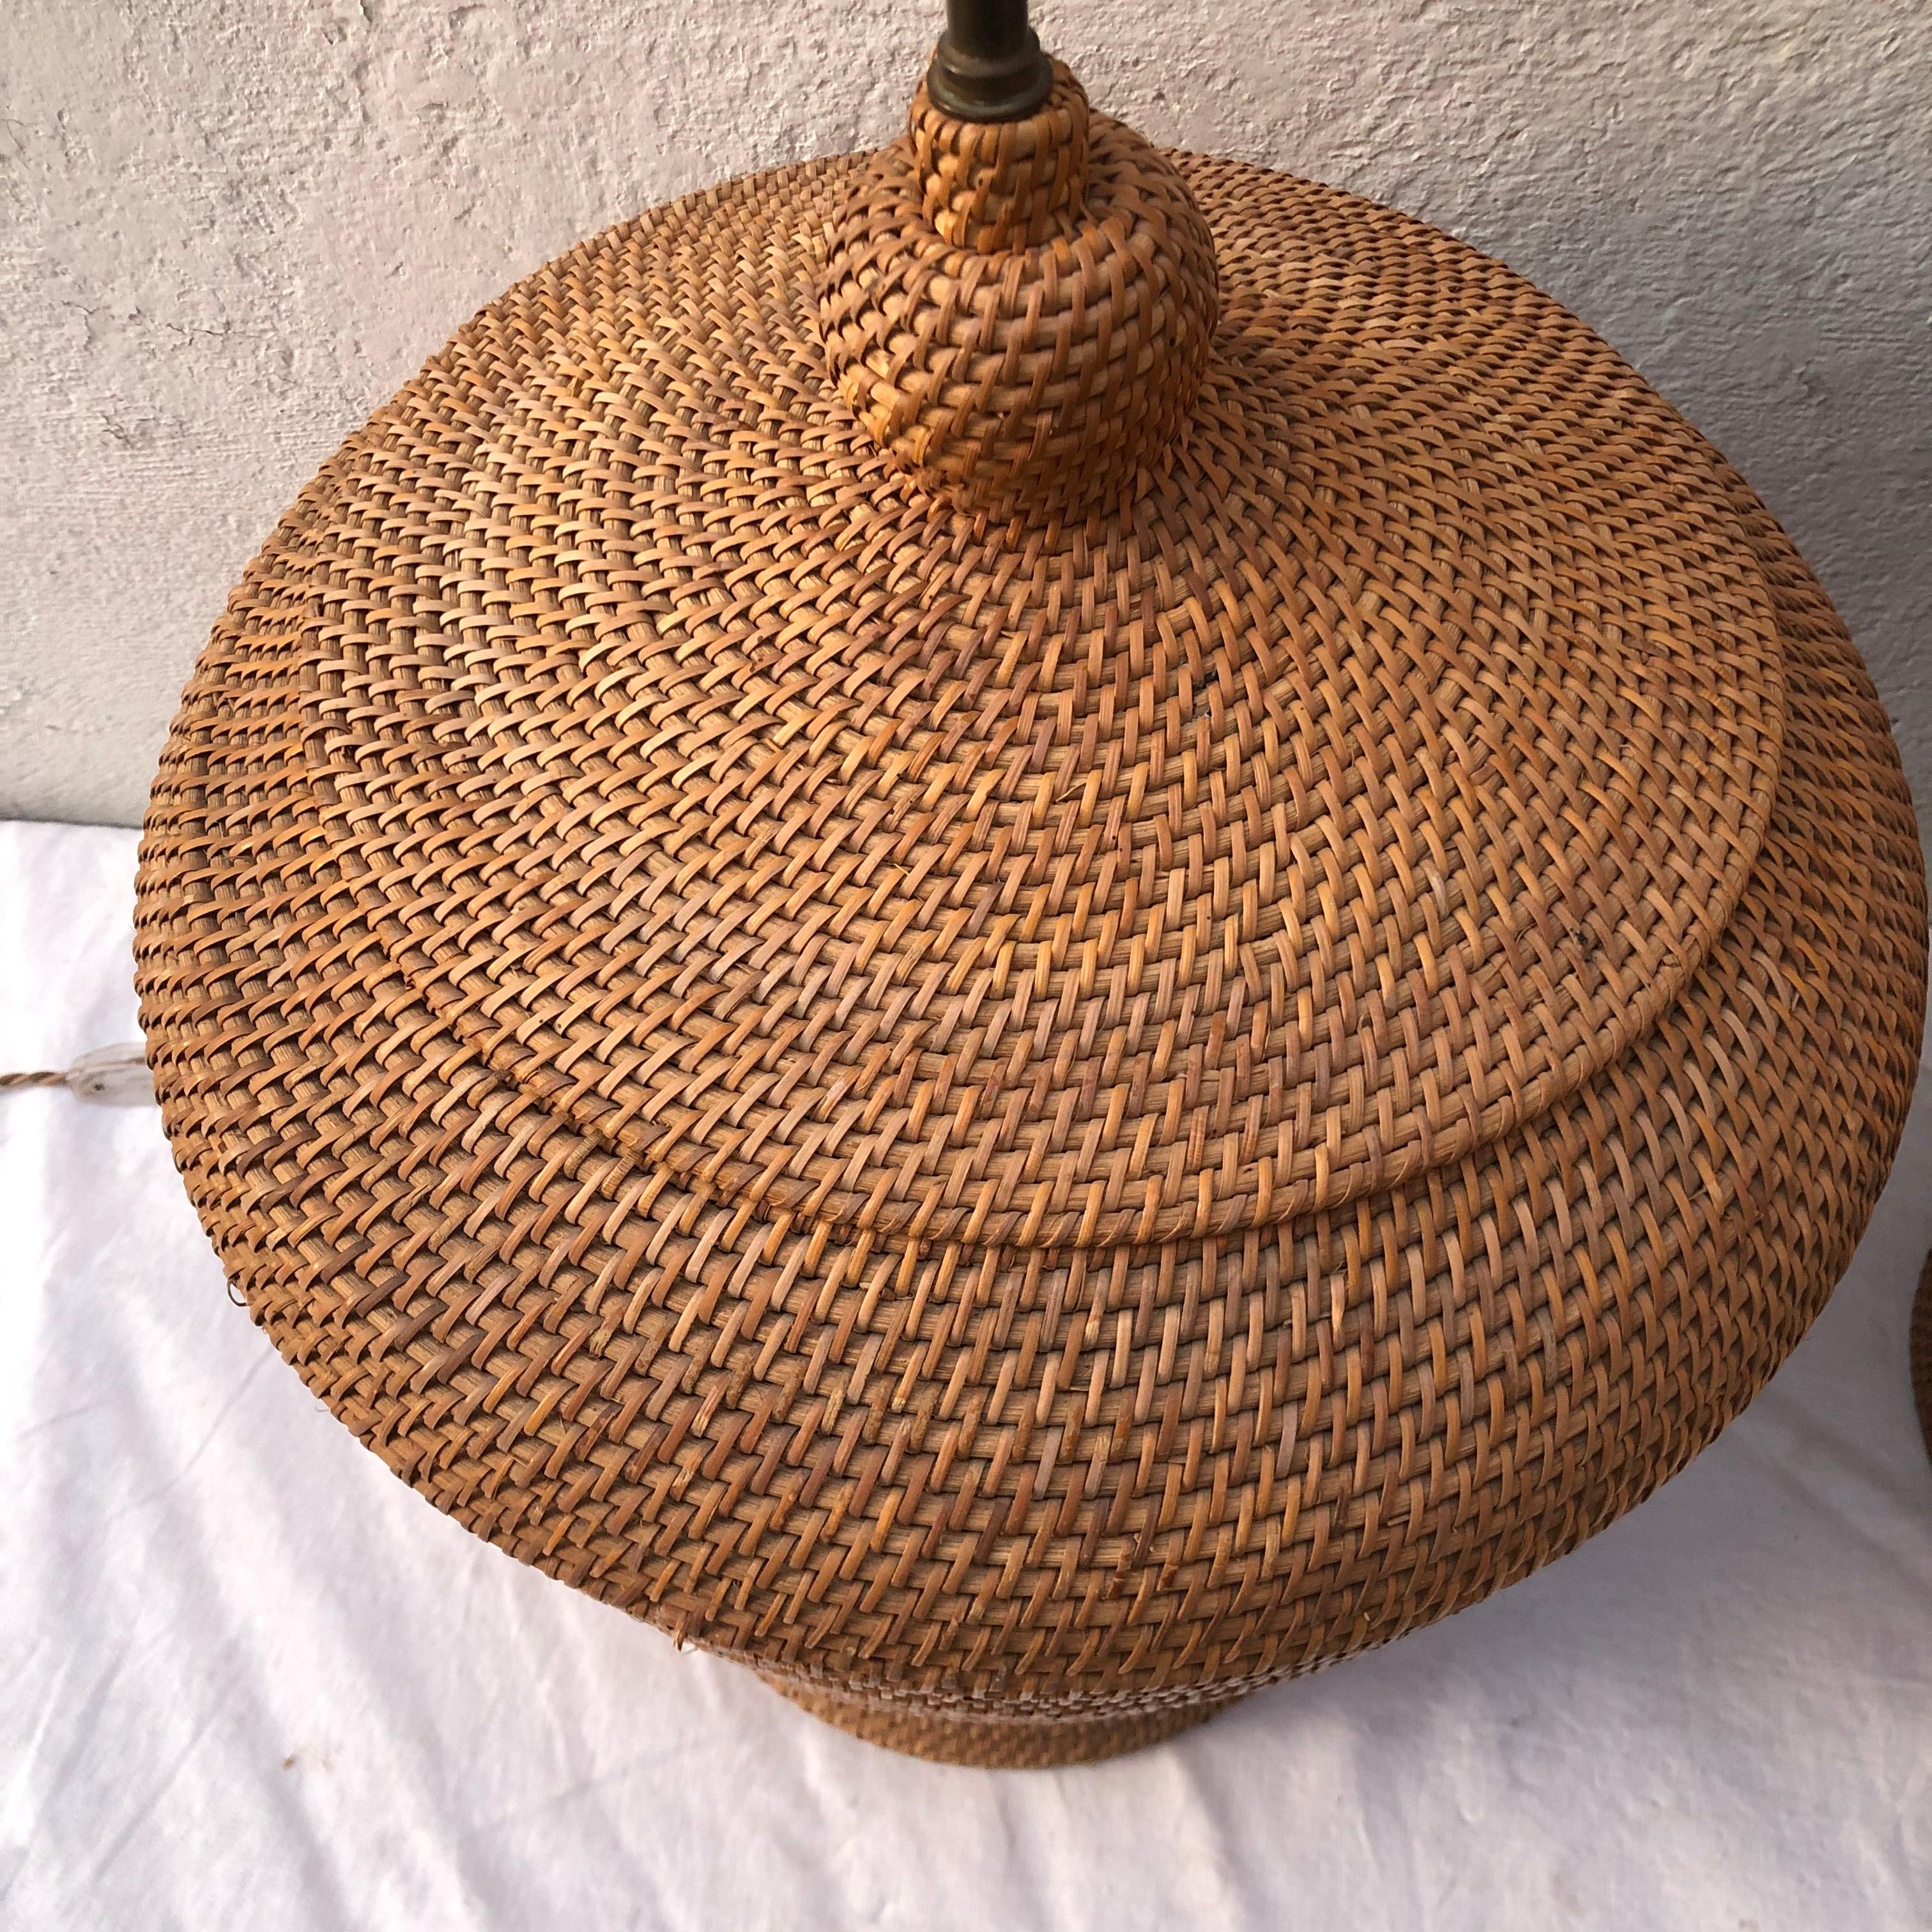 basket weave lamp